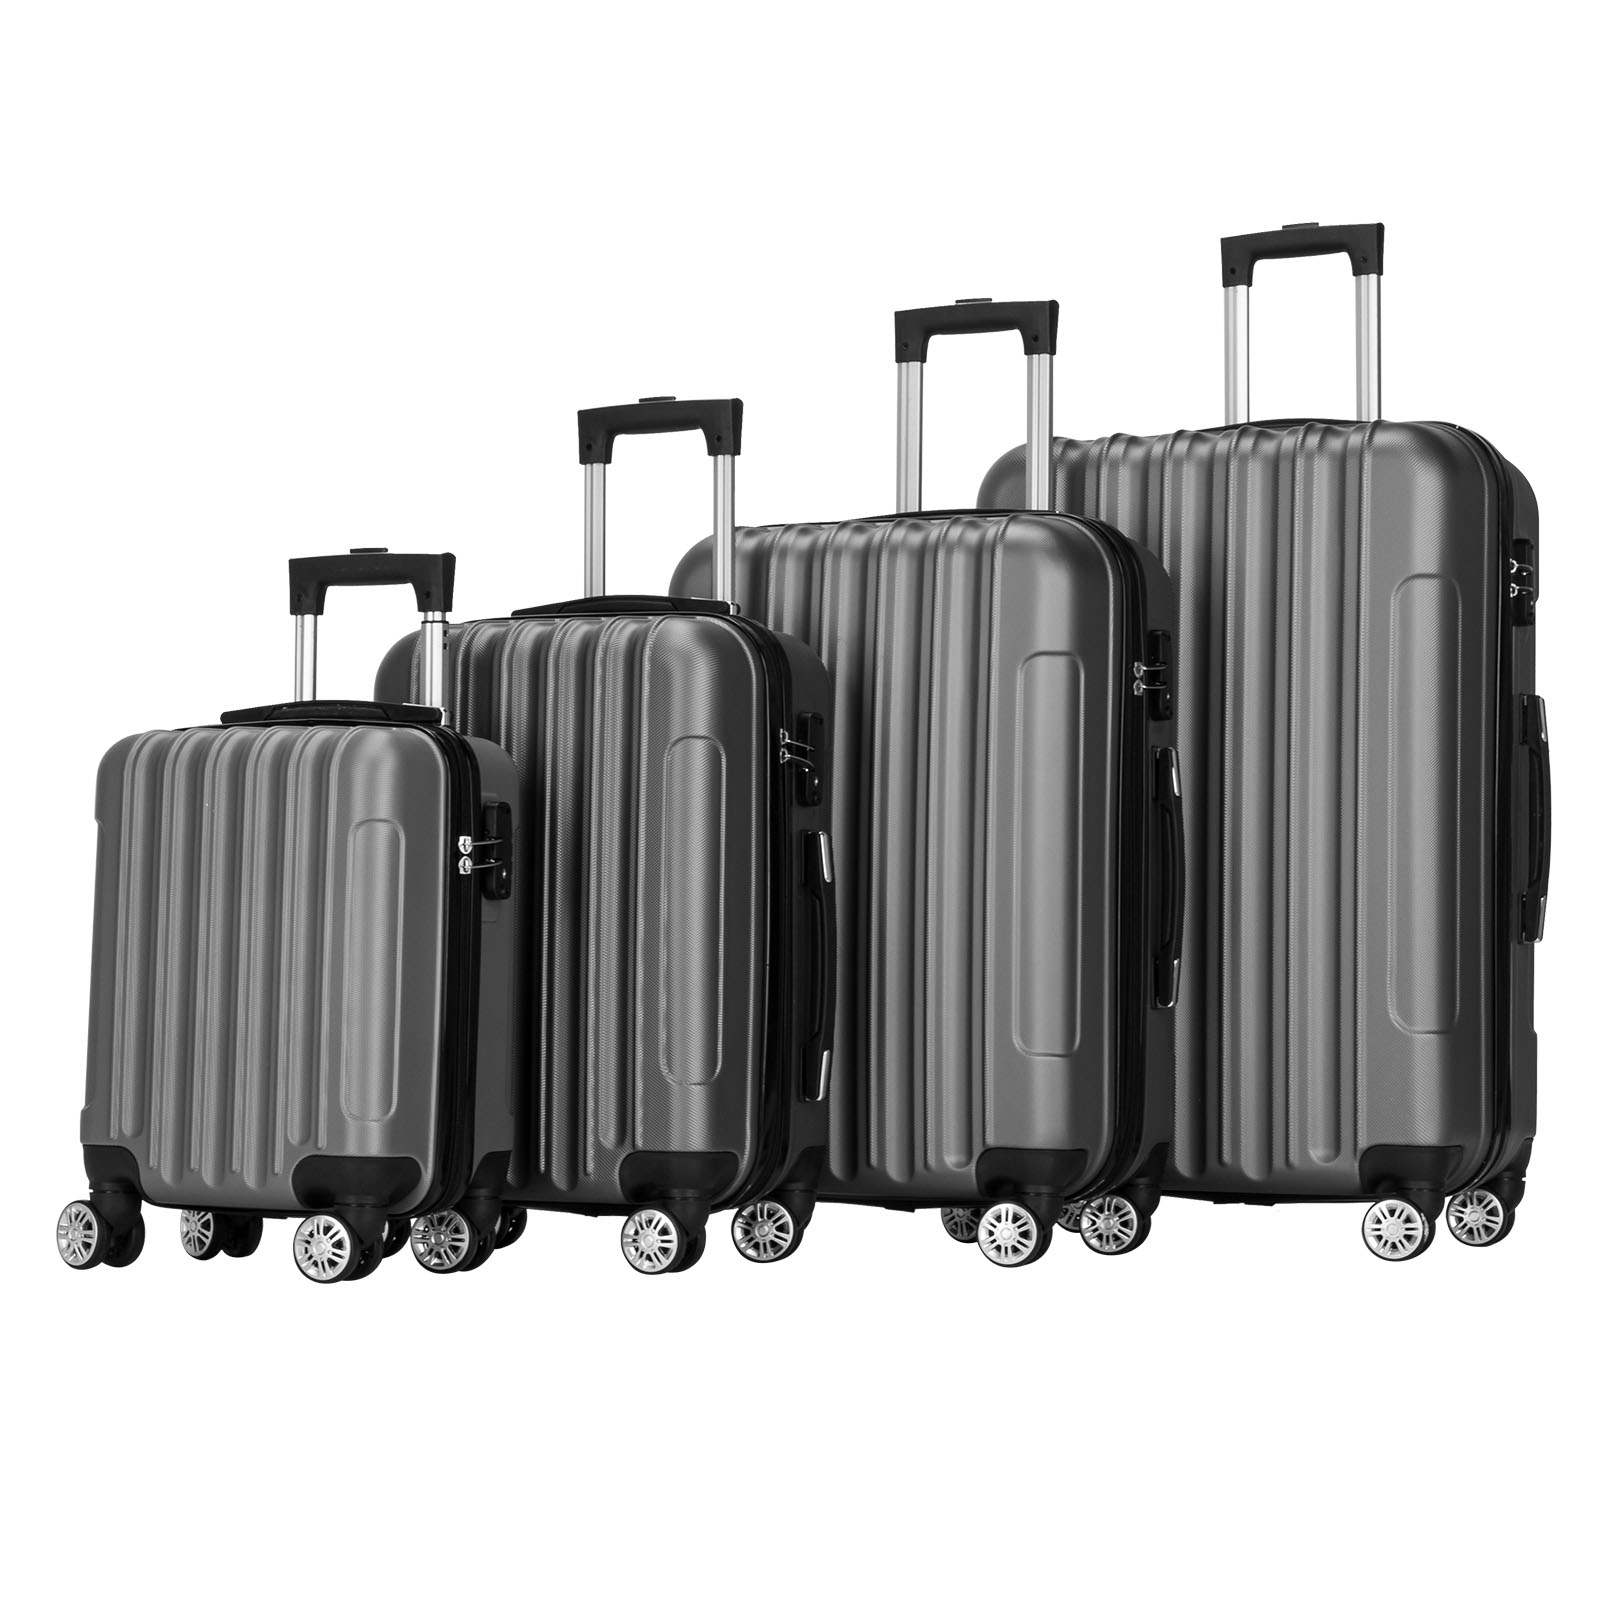 Zimtown 4 Piece Luggage Set, ABS Hard Shell Suitcase Luggage Sets Double Wheels with TSA Lock, Dark Gray - image 5 of 12